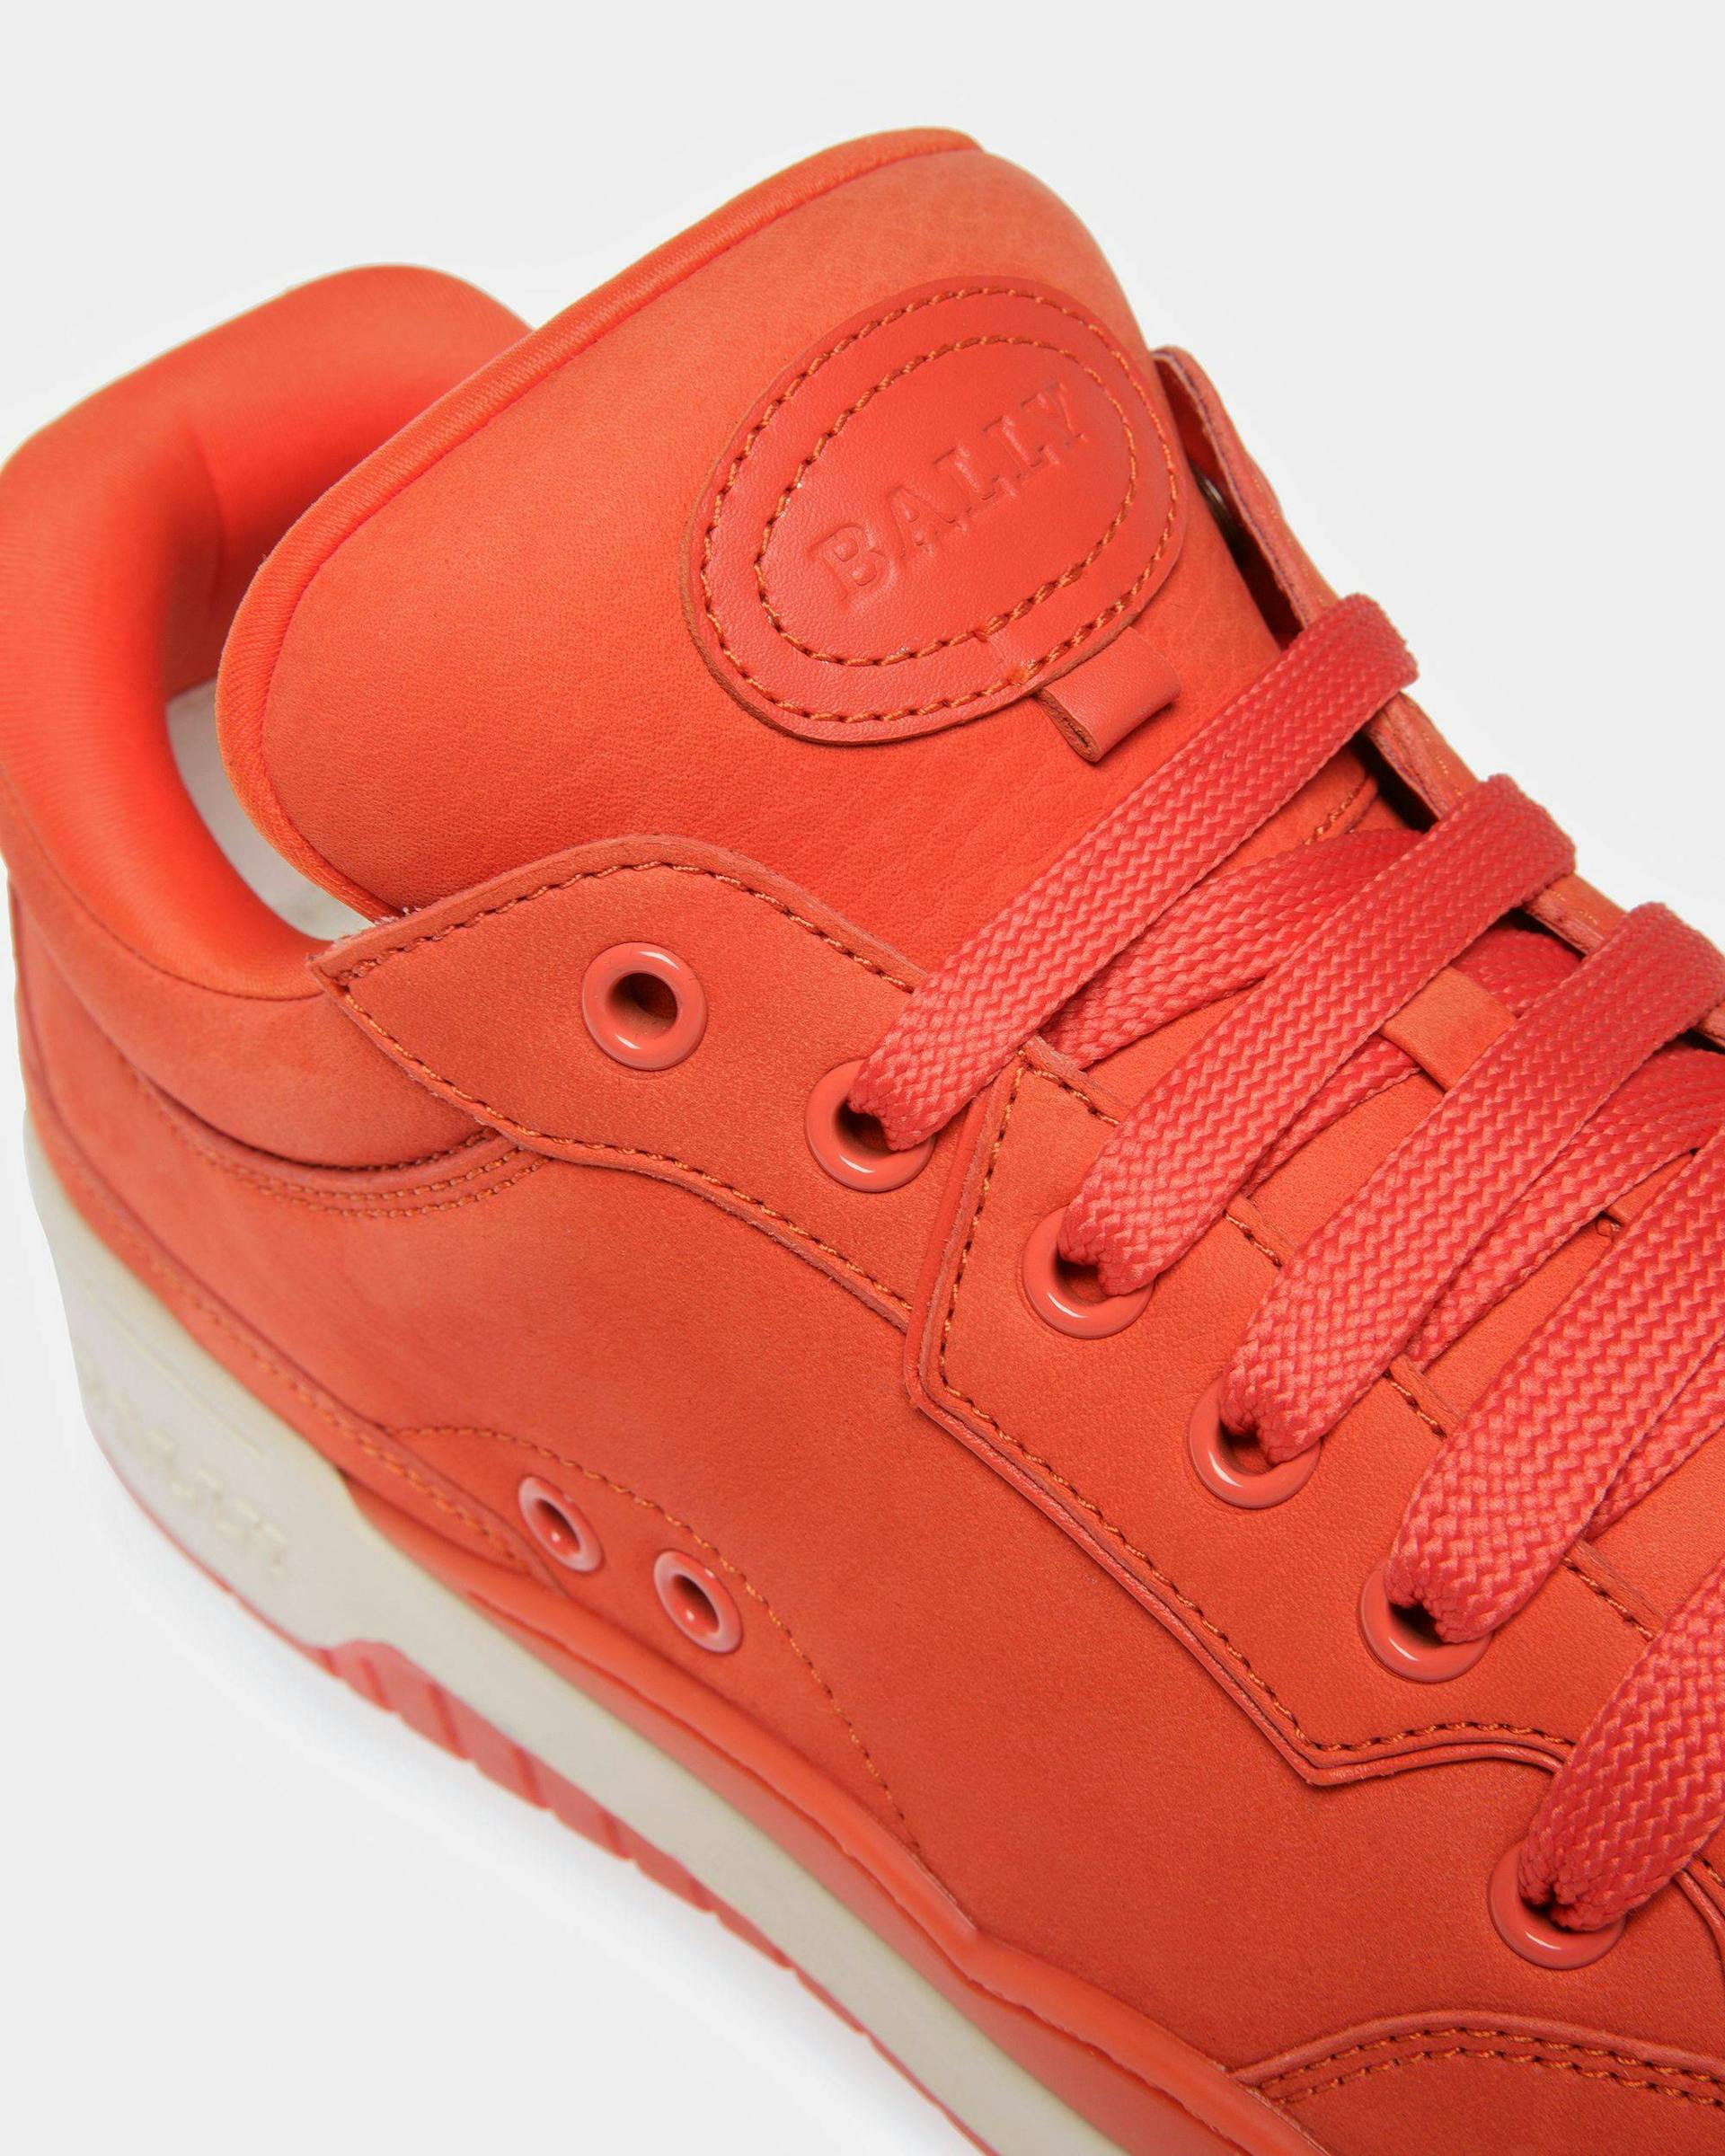 Kiro Leather Sneakers In Orange - Men's - Bally - 06